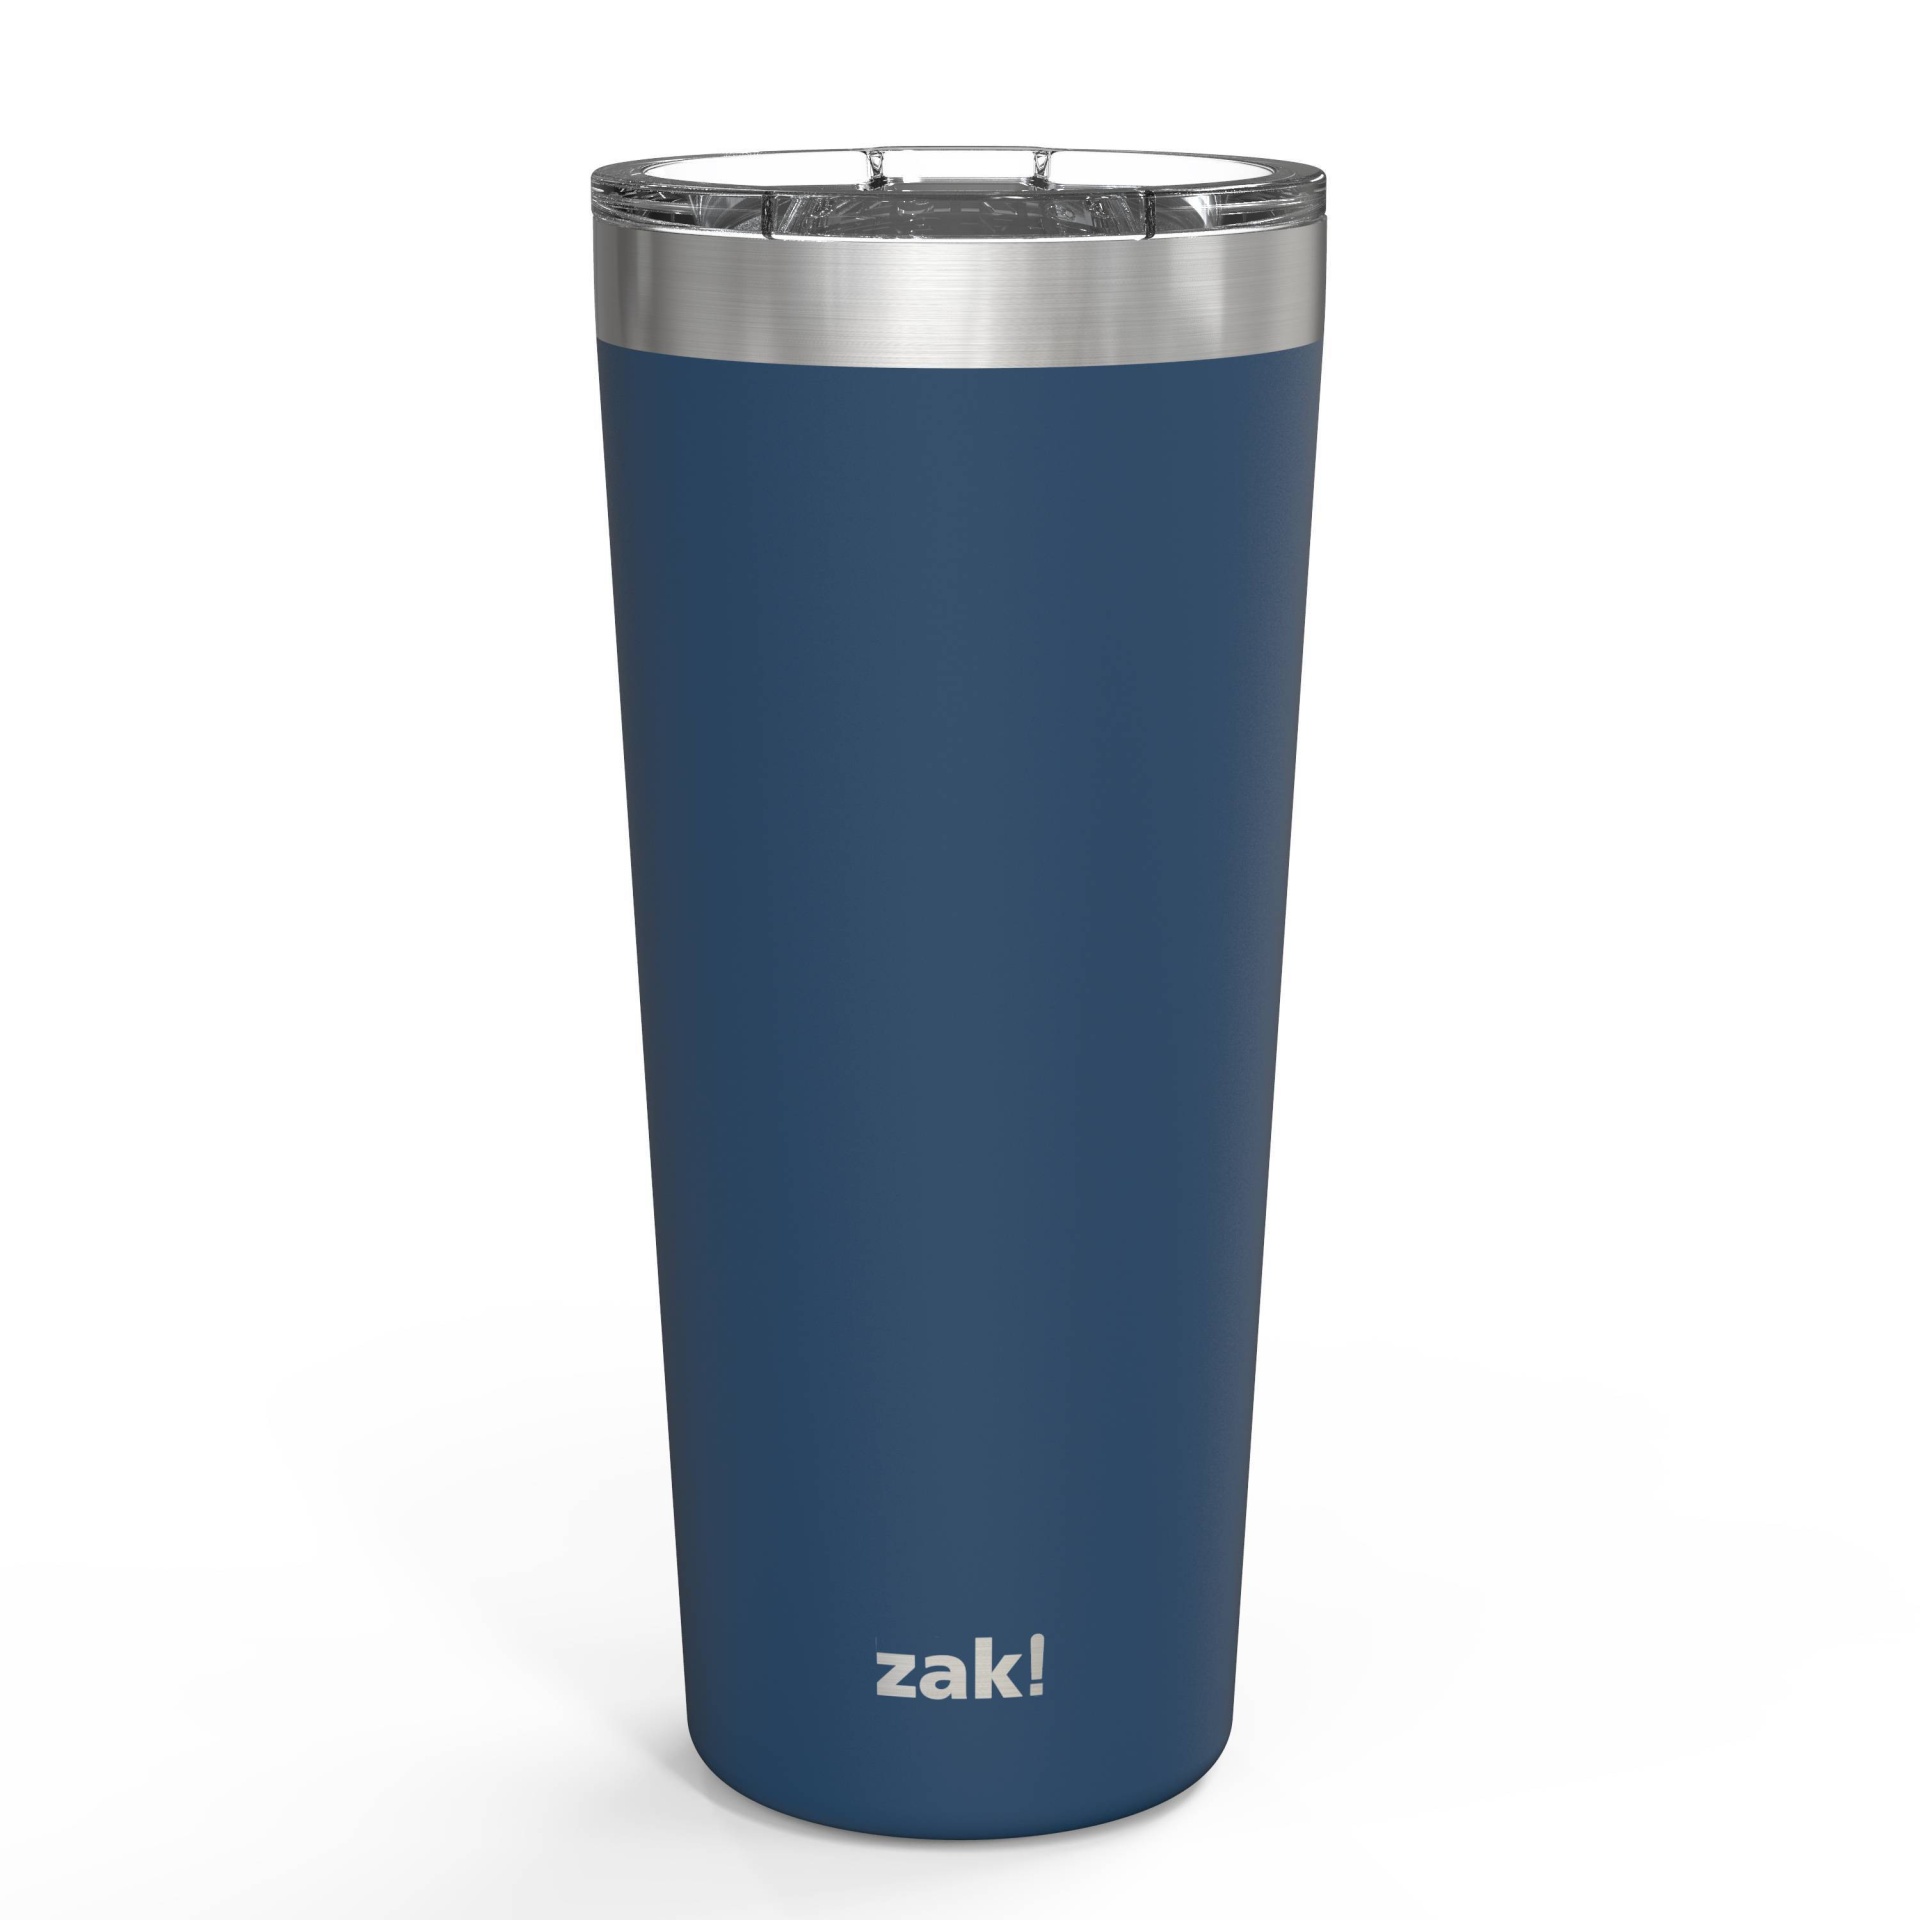 Zak Designs Zak! Designs 20oz Double Wall Stainless Steel Latah Tumbler -  Purist Blue 1 ct